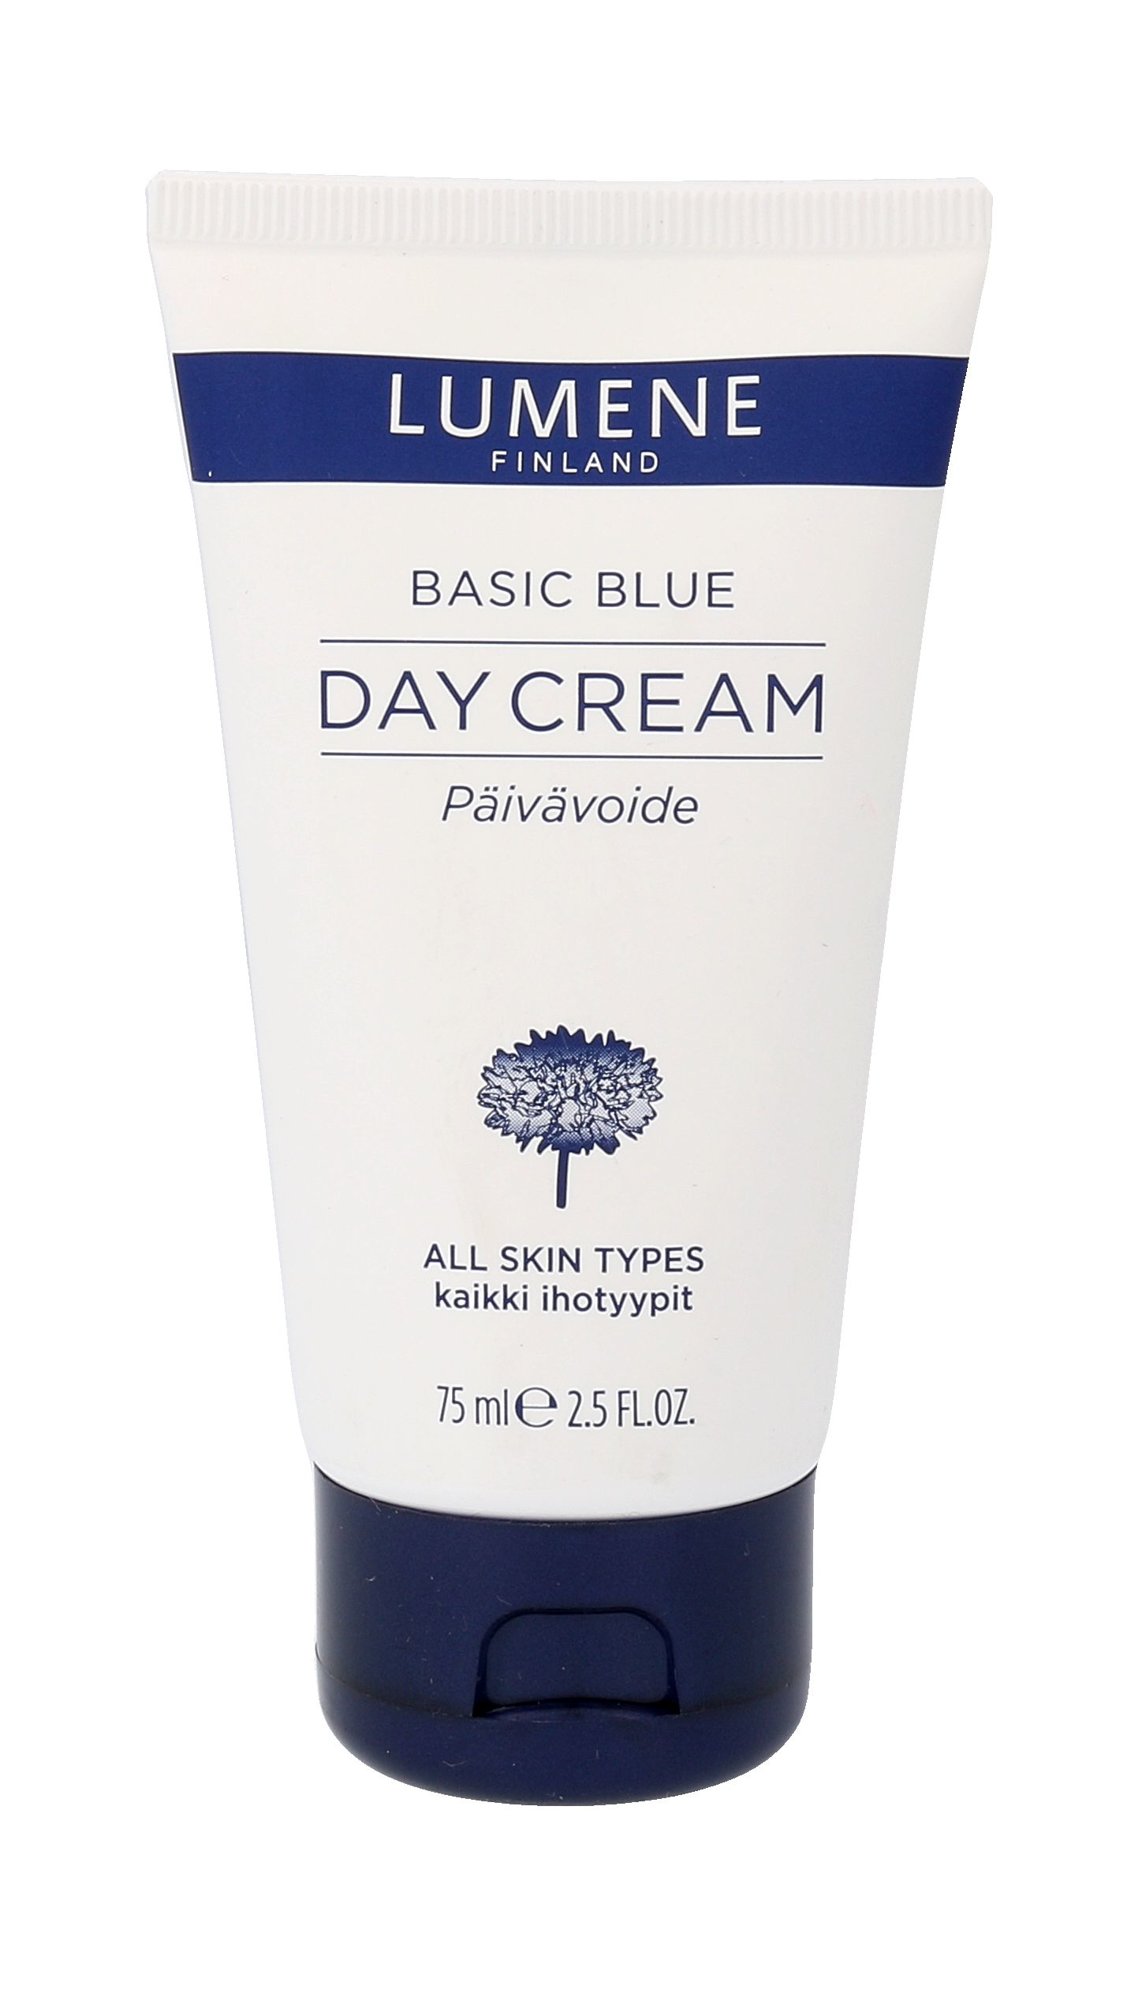 Lumene Basic Blue Day Cream